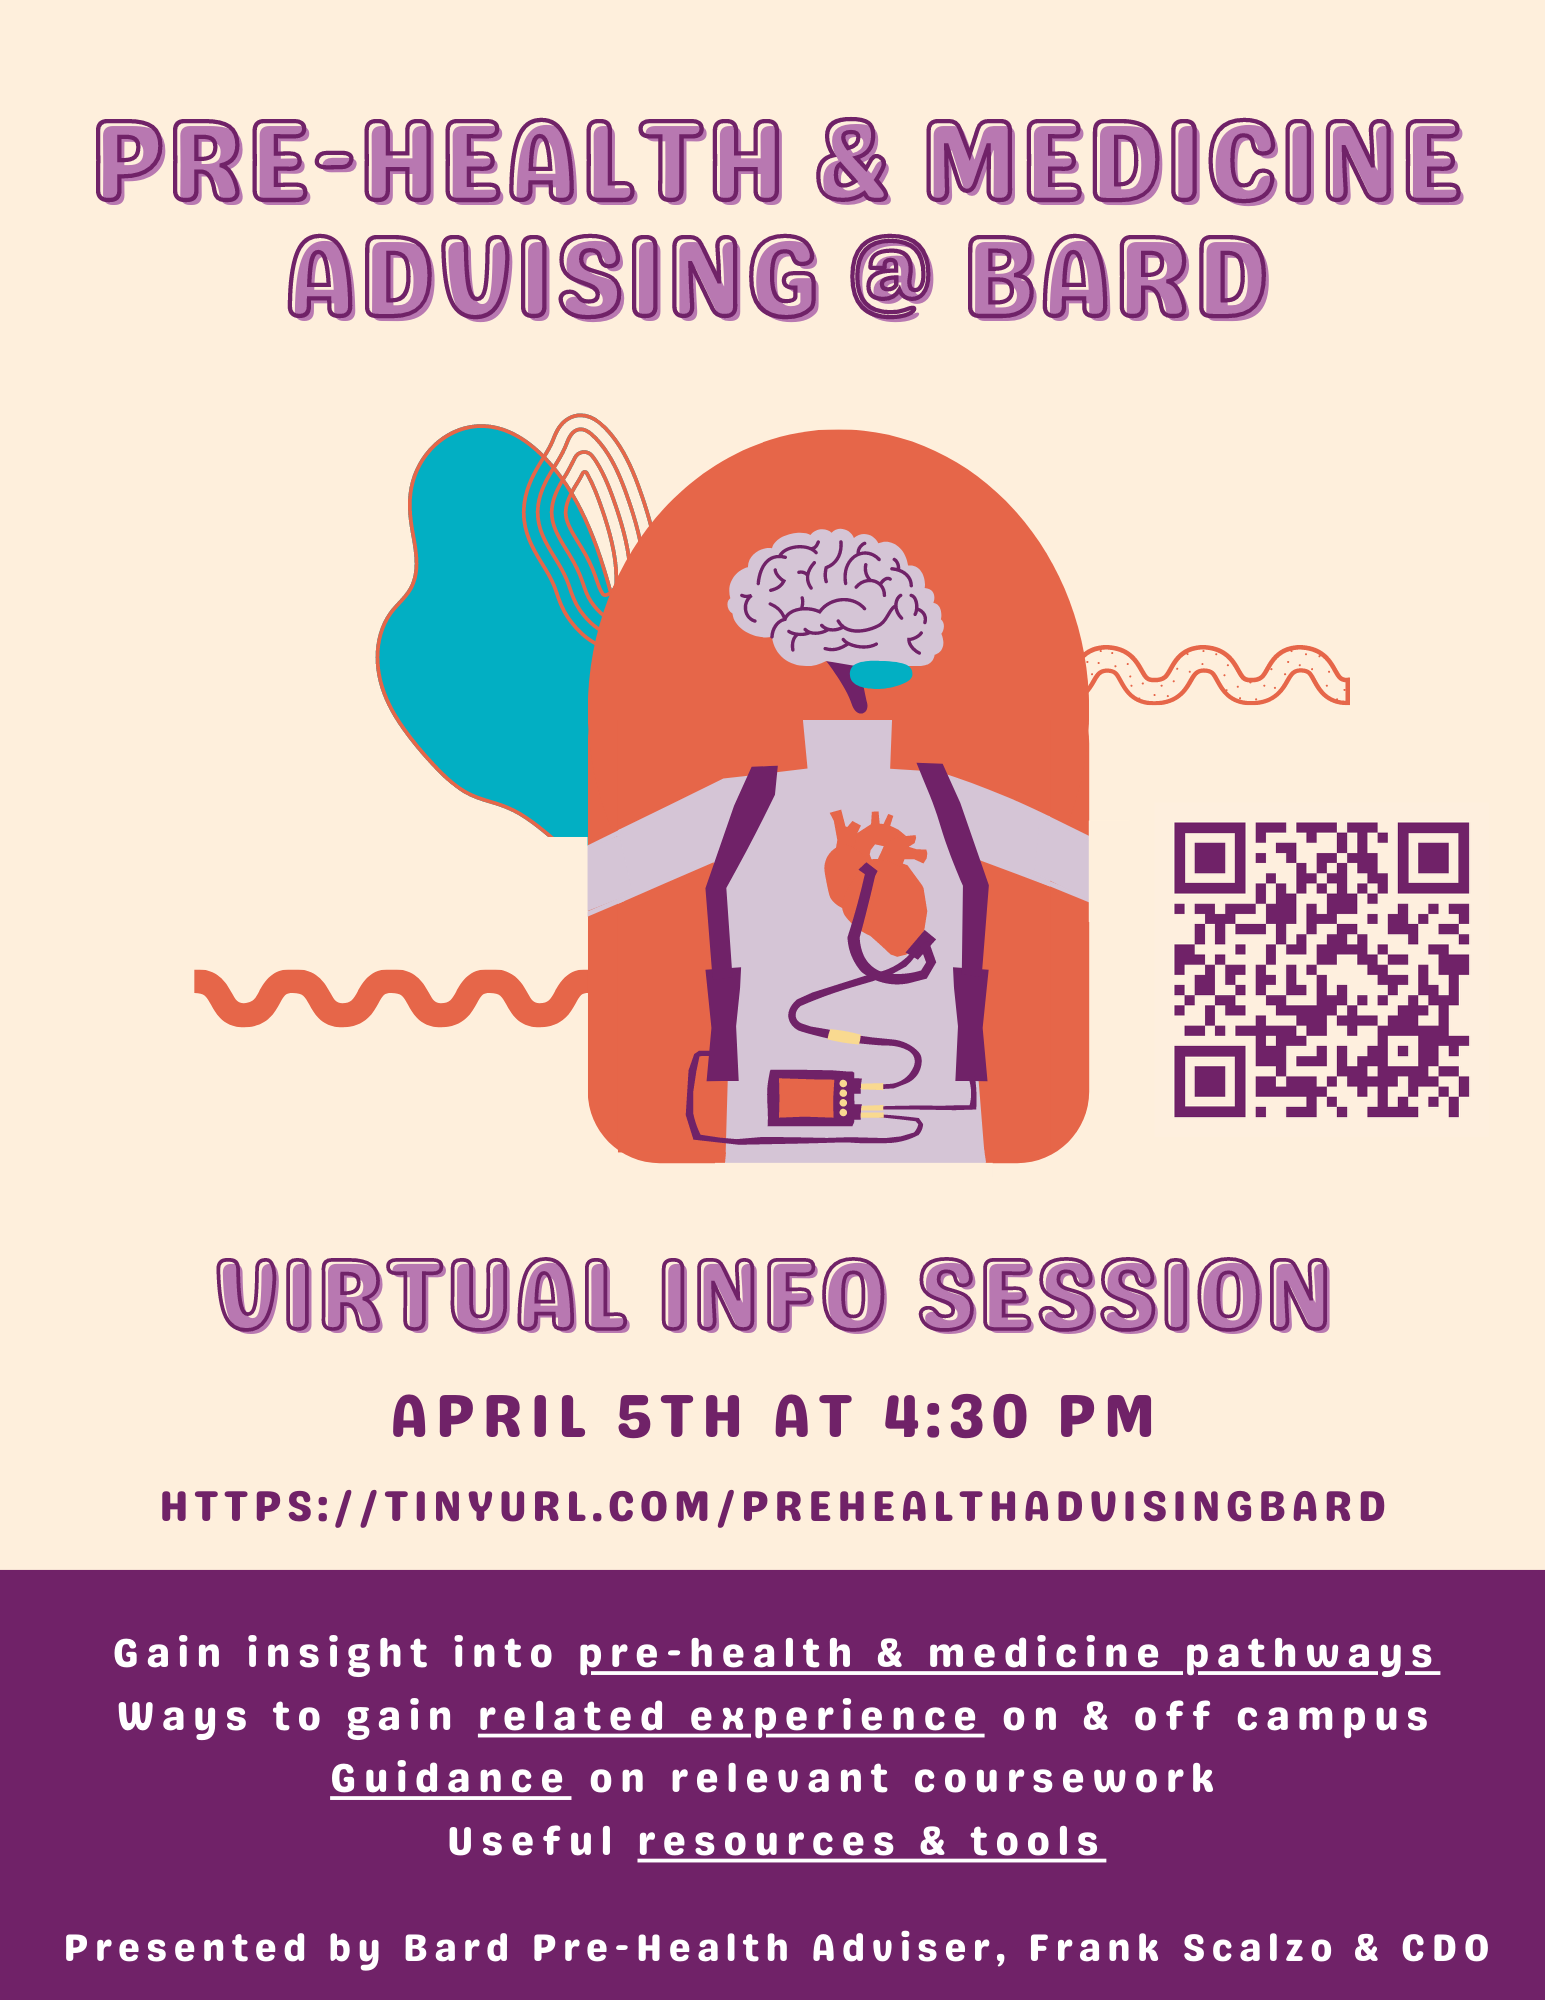 Prehealth and Medicine Advising @ Bard - Virtual Info Session